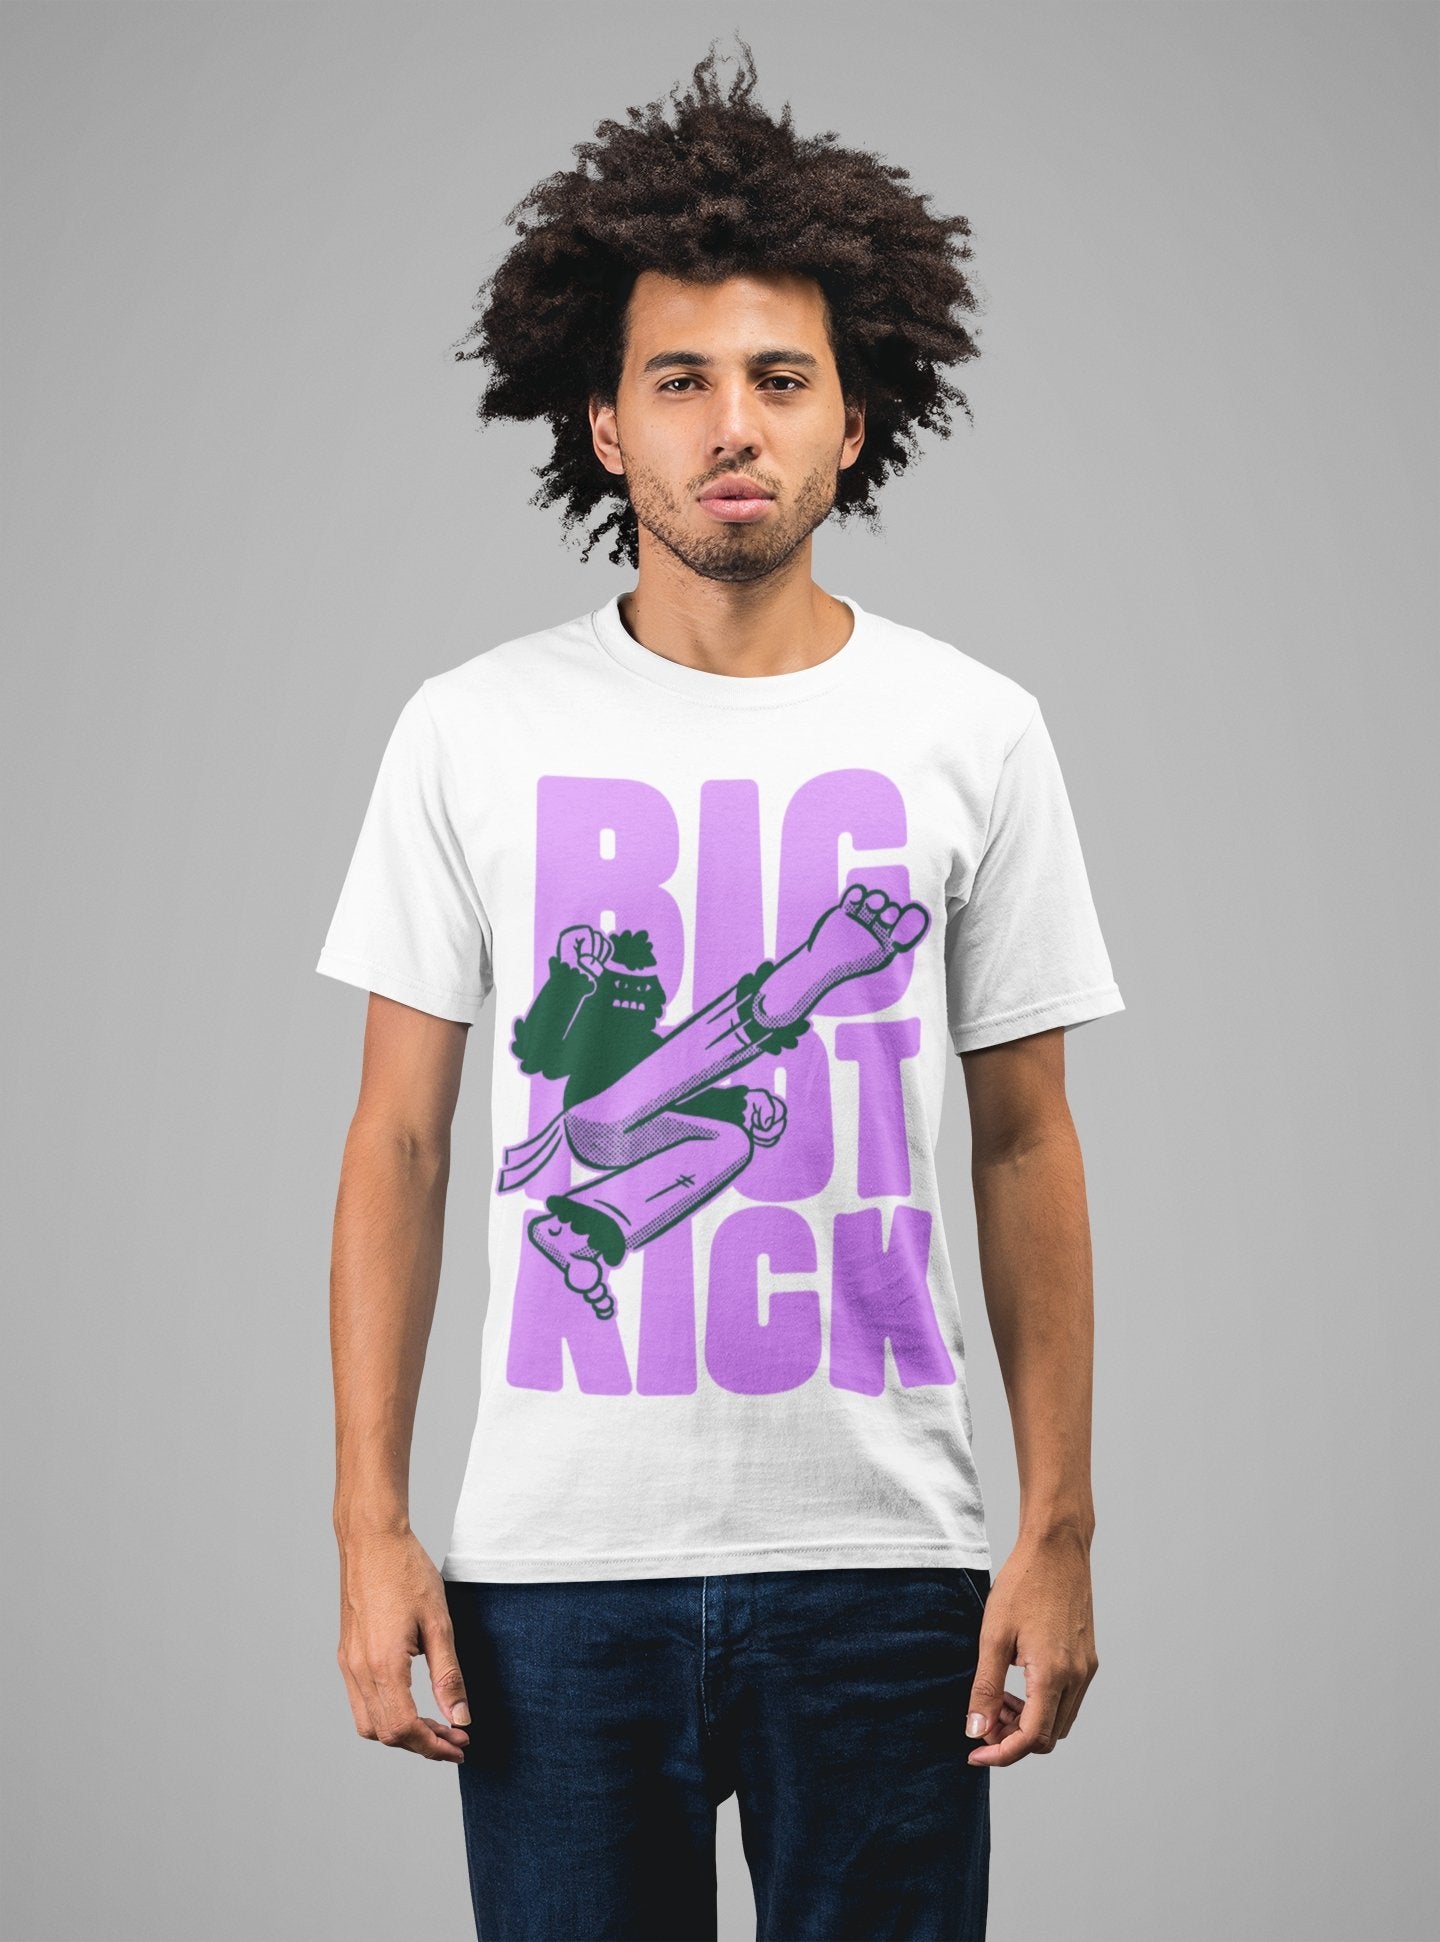 Flying Bigfoot T-shirt - Bigfoot Kick